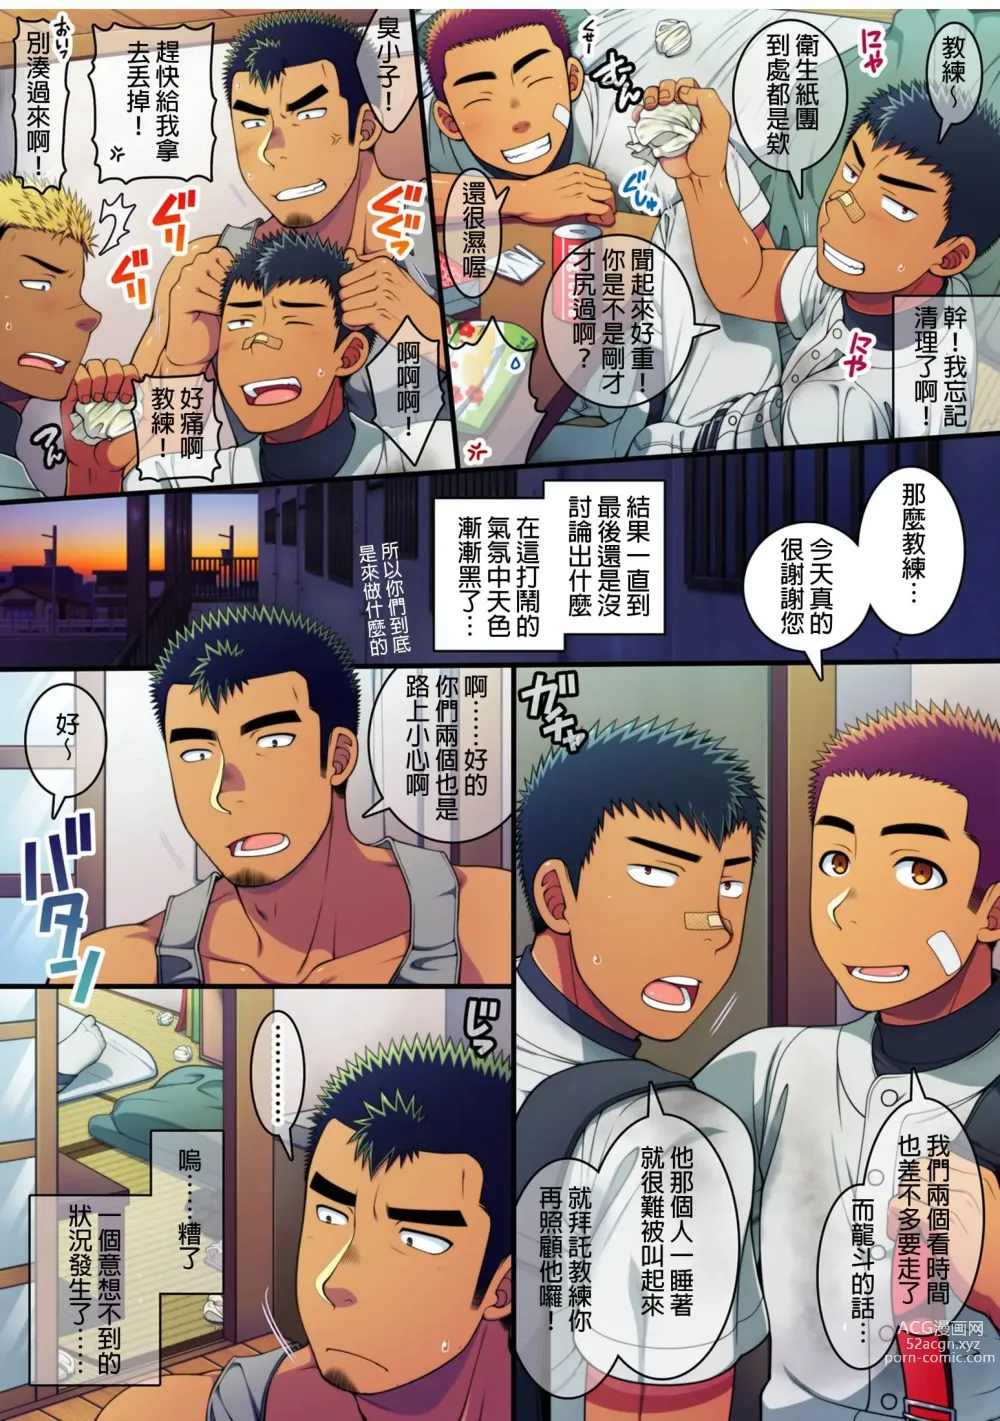 Page 7 of doujinshi 童貞教練暗戀著棒球隊隊員無法自拔著迷於他的大肉棒!